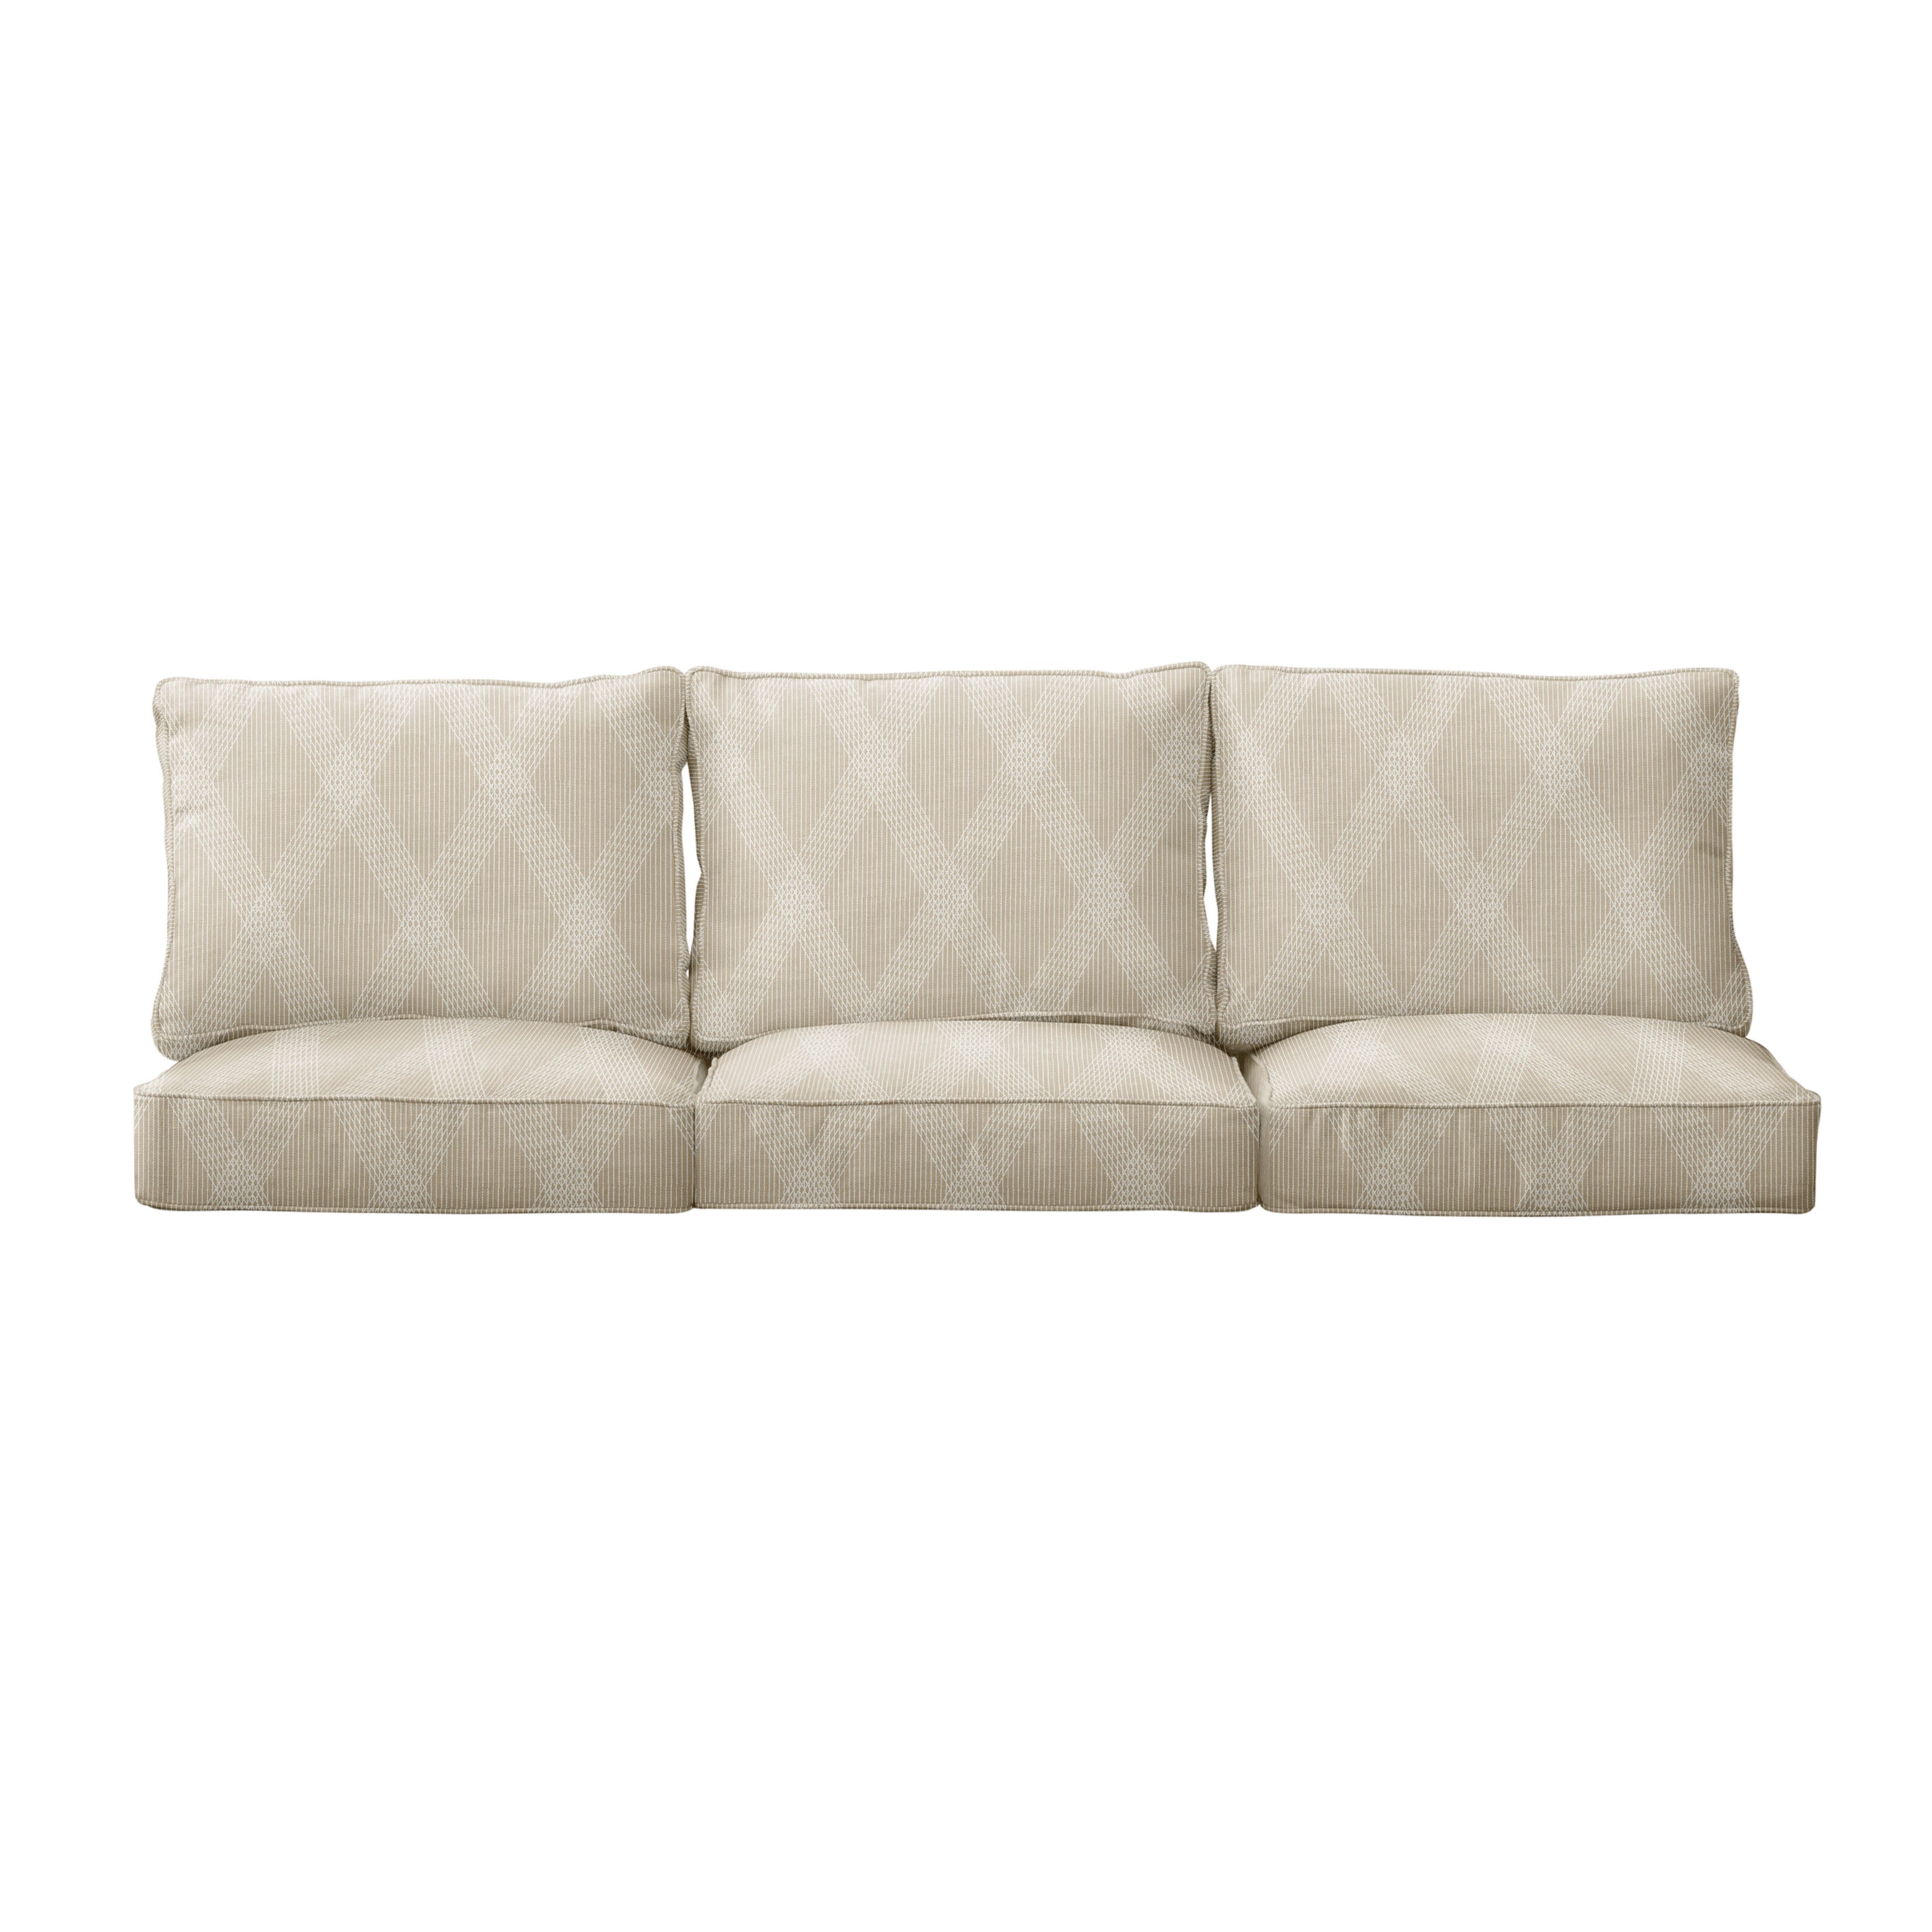 Outdura Square Outdoor Deep Seating Sofa Cushion Set